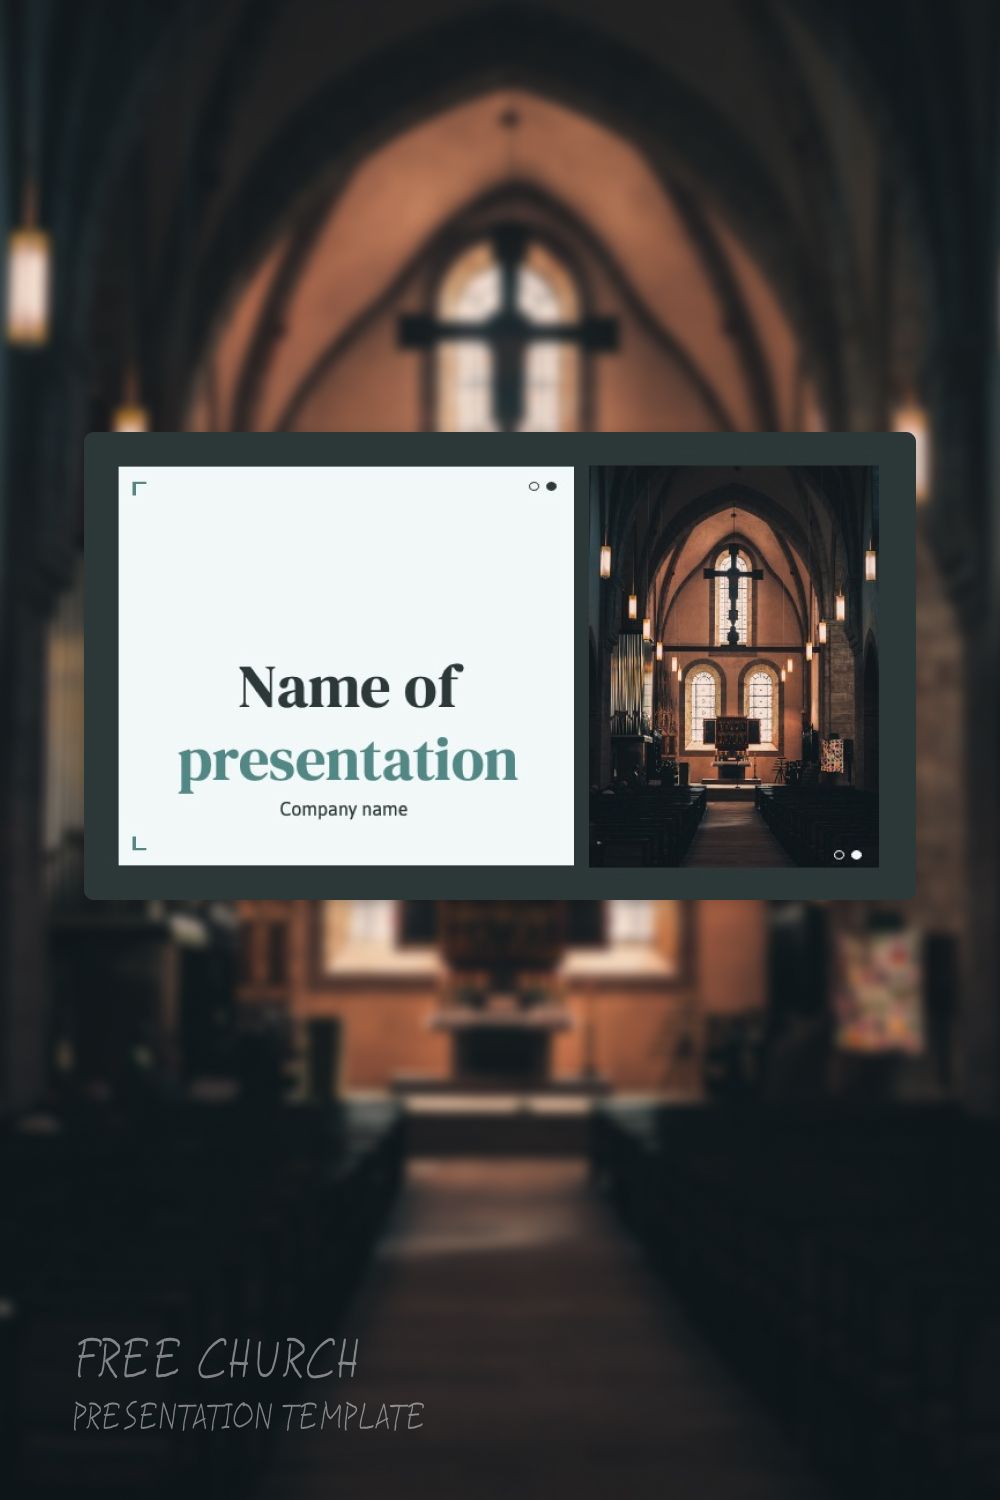 Church presentation template of pinterest.